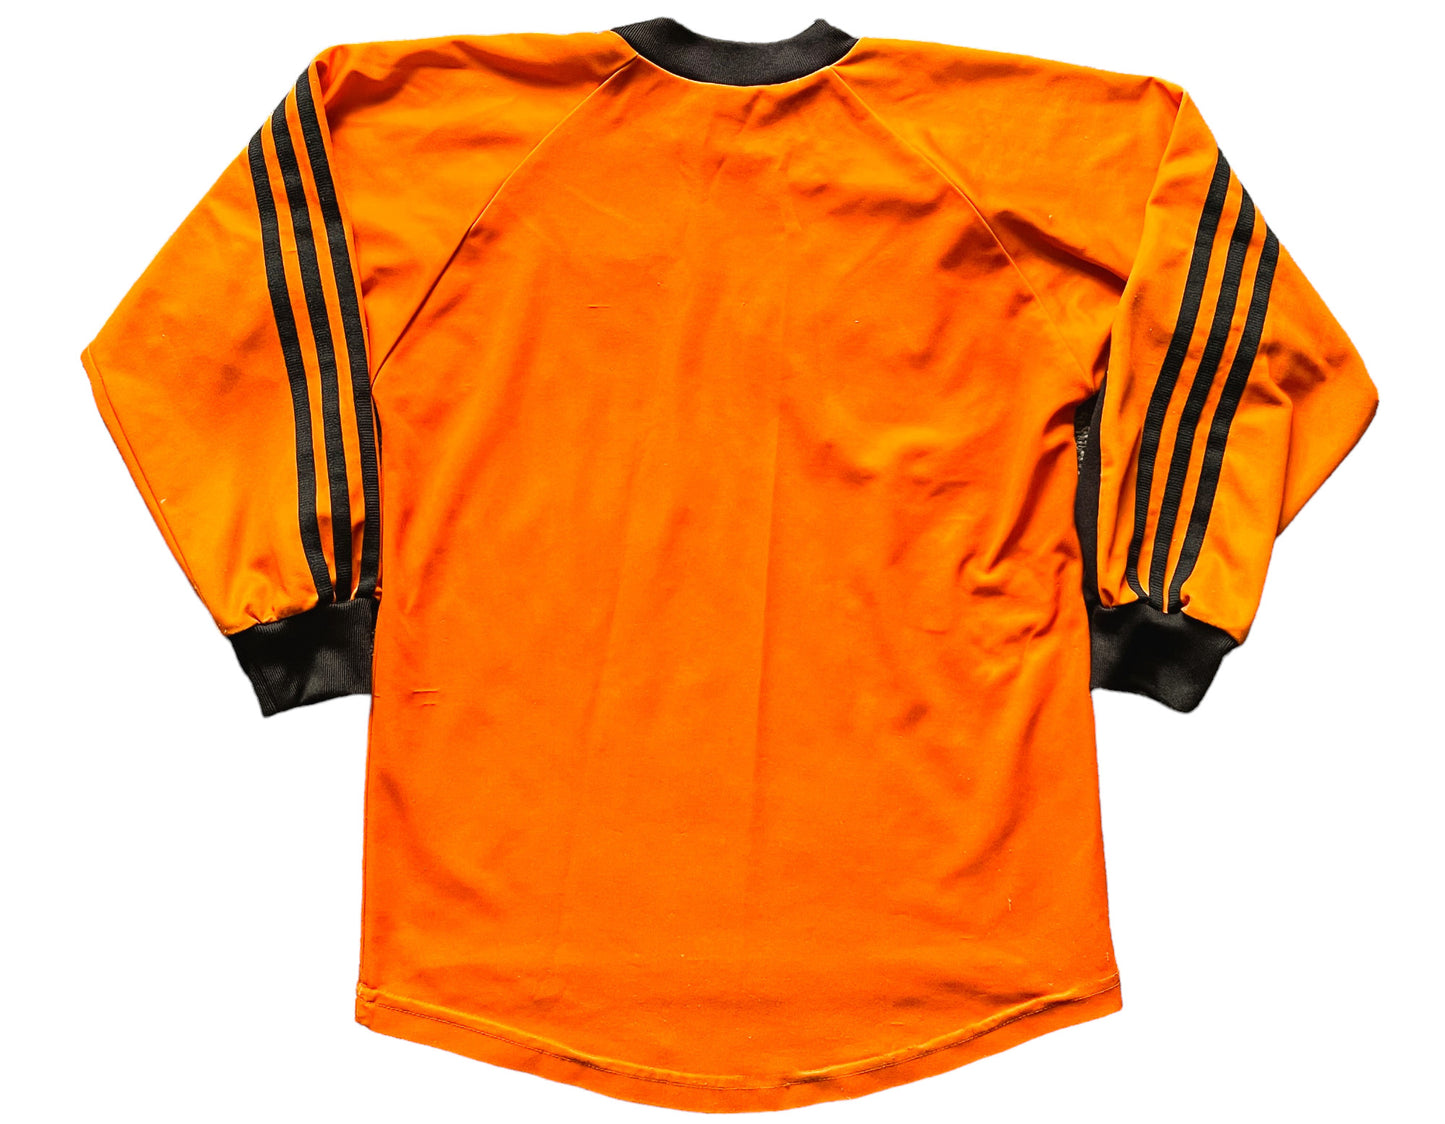 Newcastle Goalkeeper Shirt 1997 (fair) Adults XS / Large Boys 152, Ladies 12